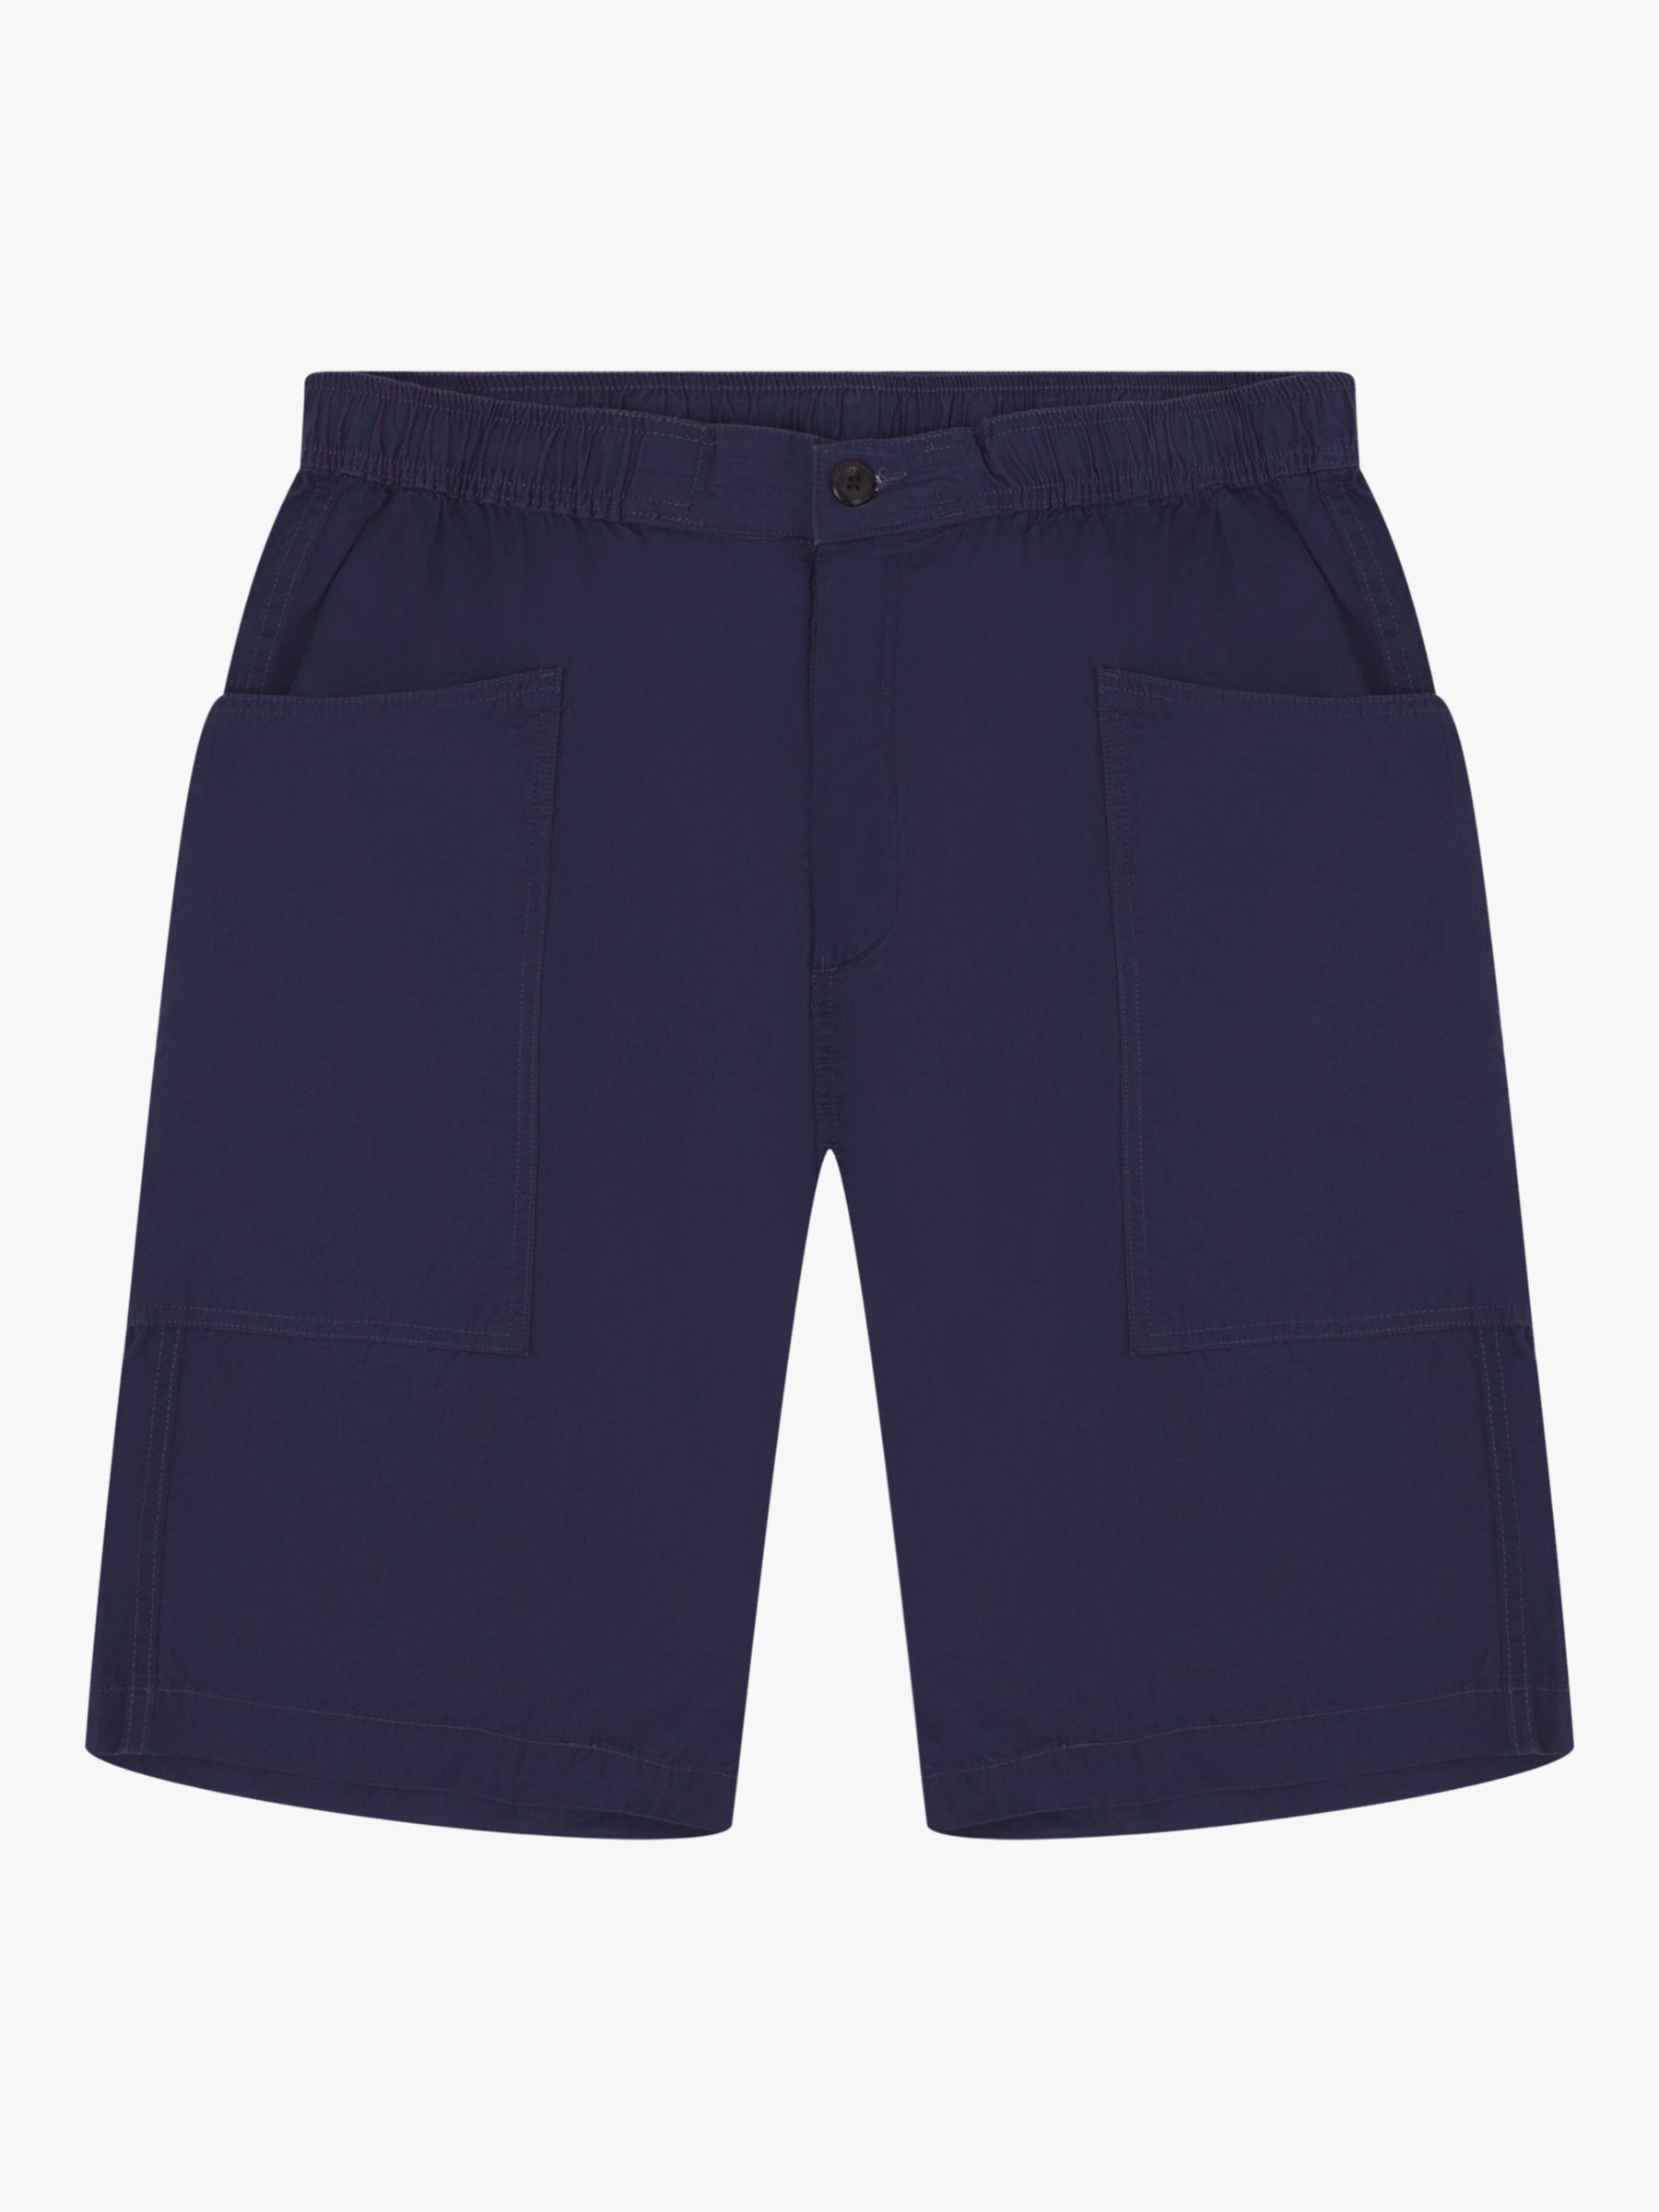 Uskees 5015 Lightweight Shorts, Midnight Blue, M